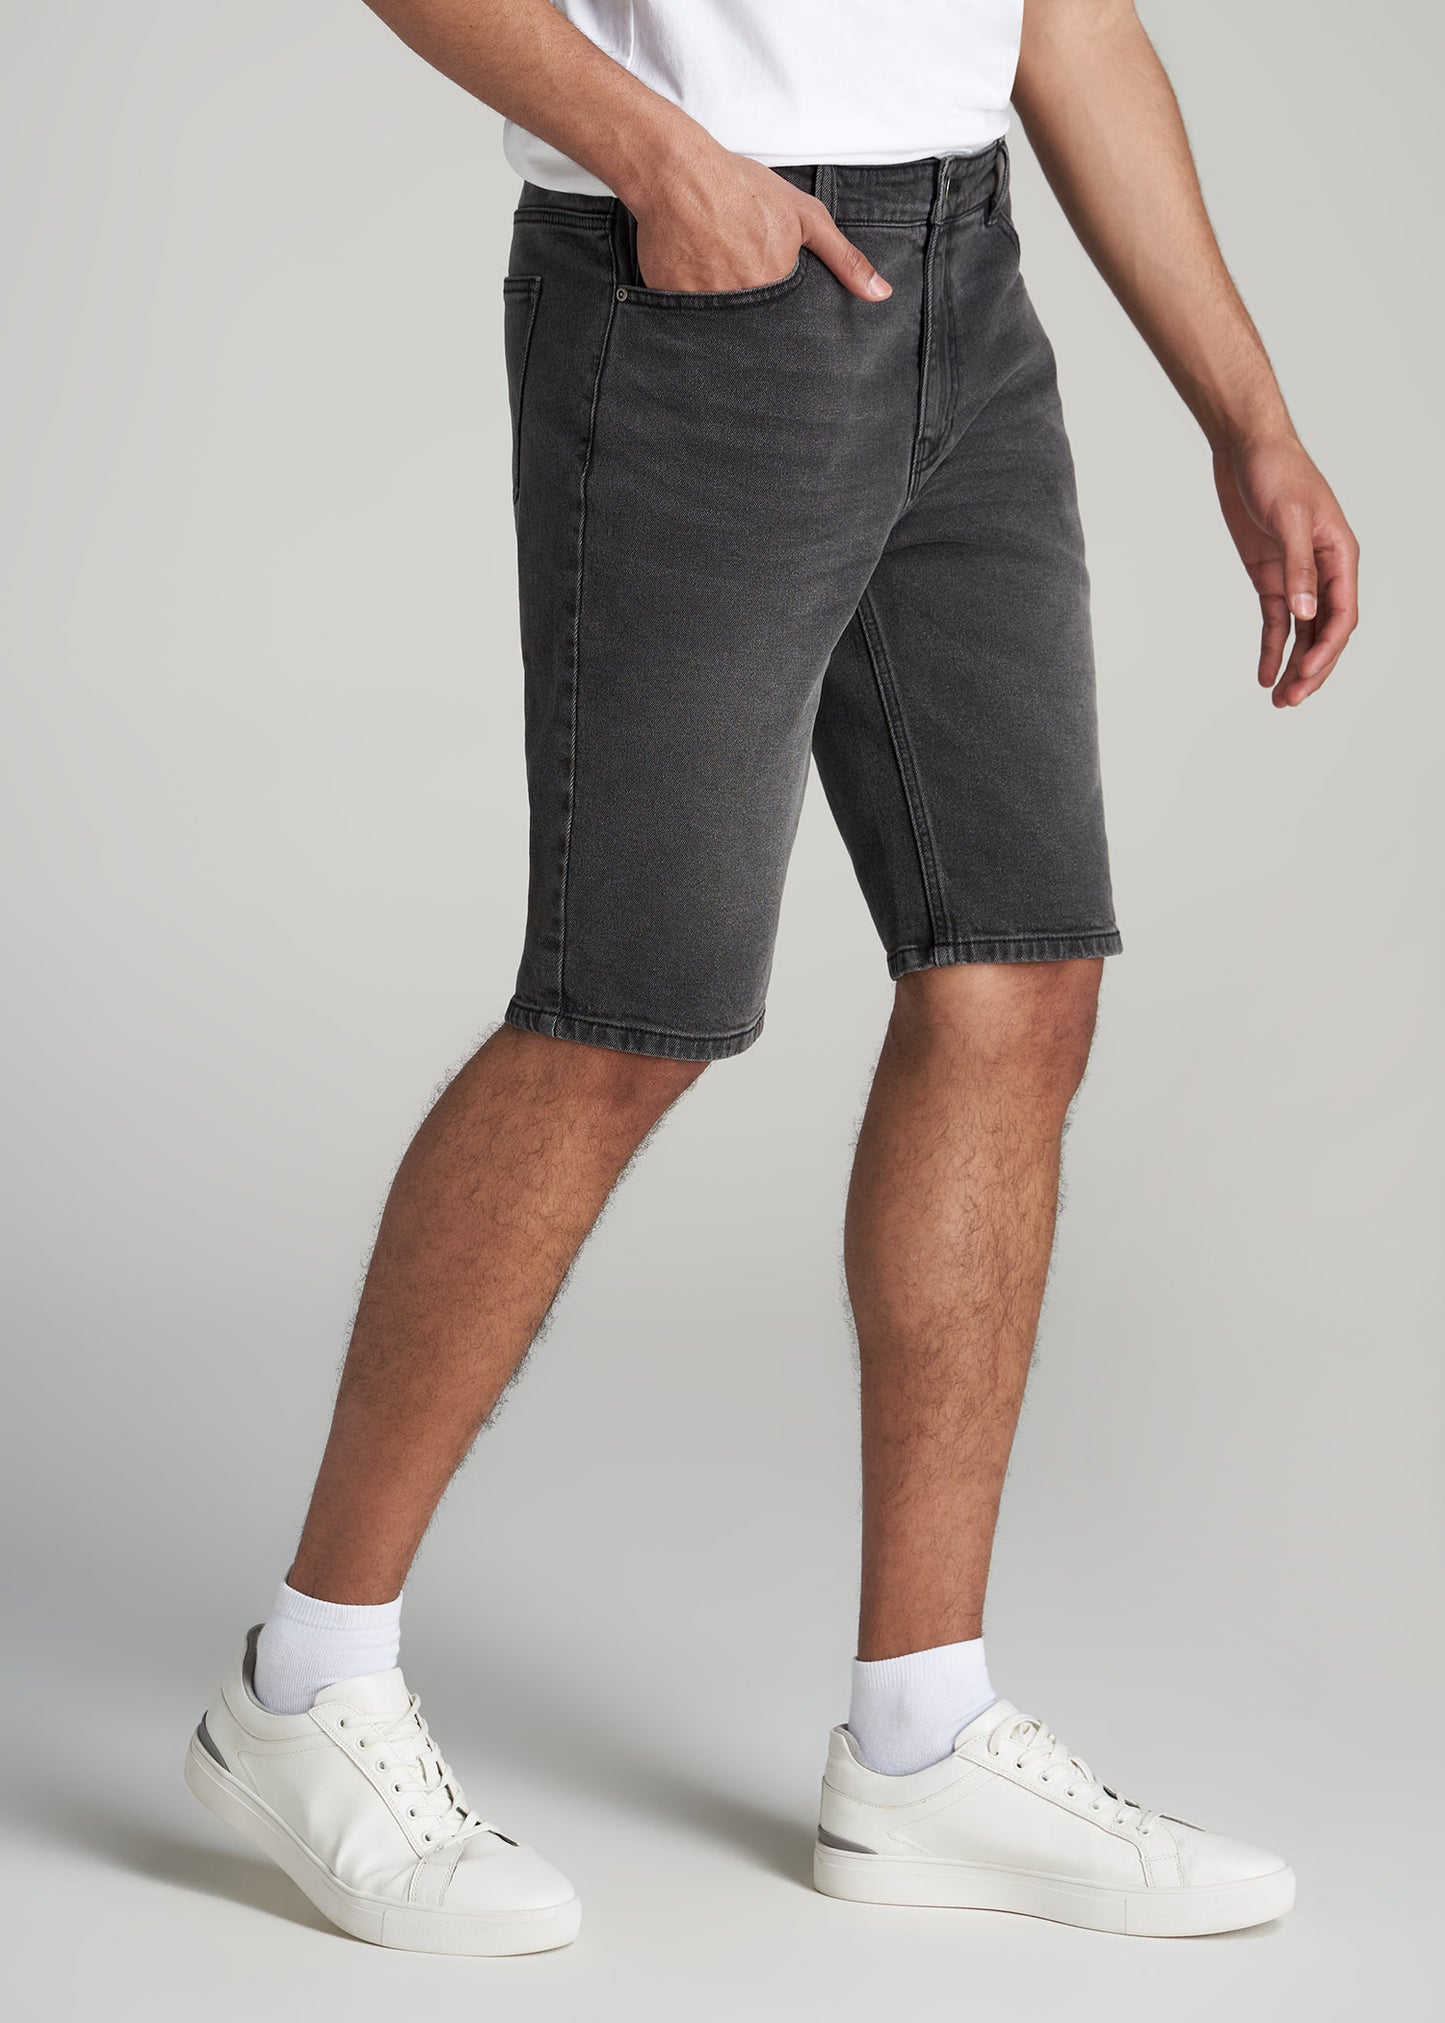    American-Tall-Men-Denim-Shorts-Vintage-Faded-Black-side